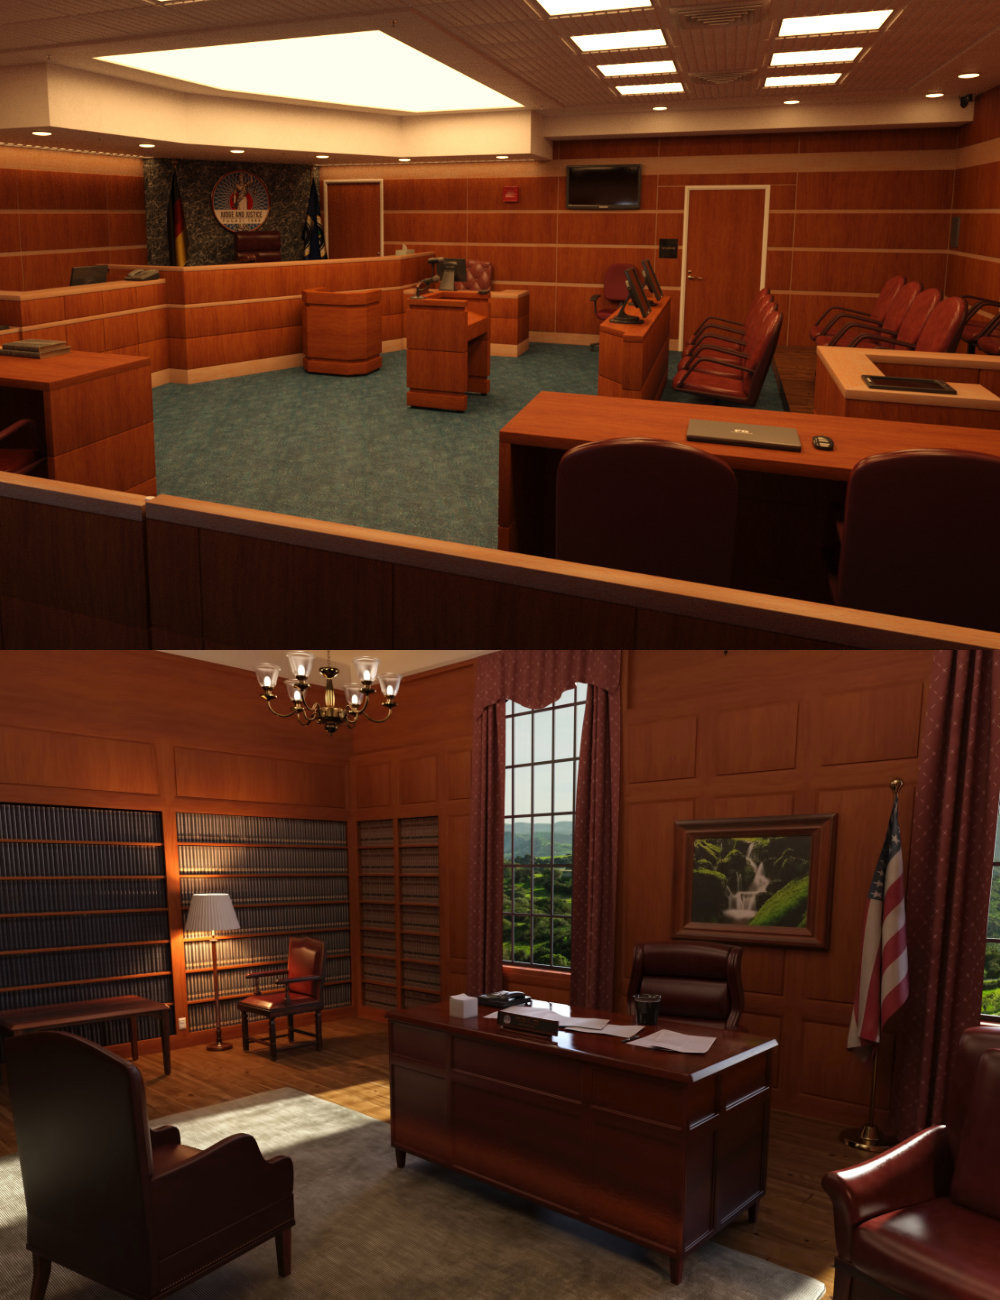 FG Courtroom by: IronmanFugazi1968, 3D Models by Daz 3D